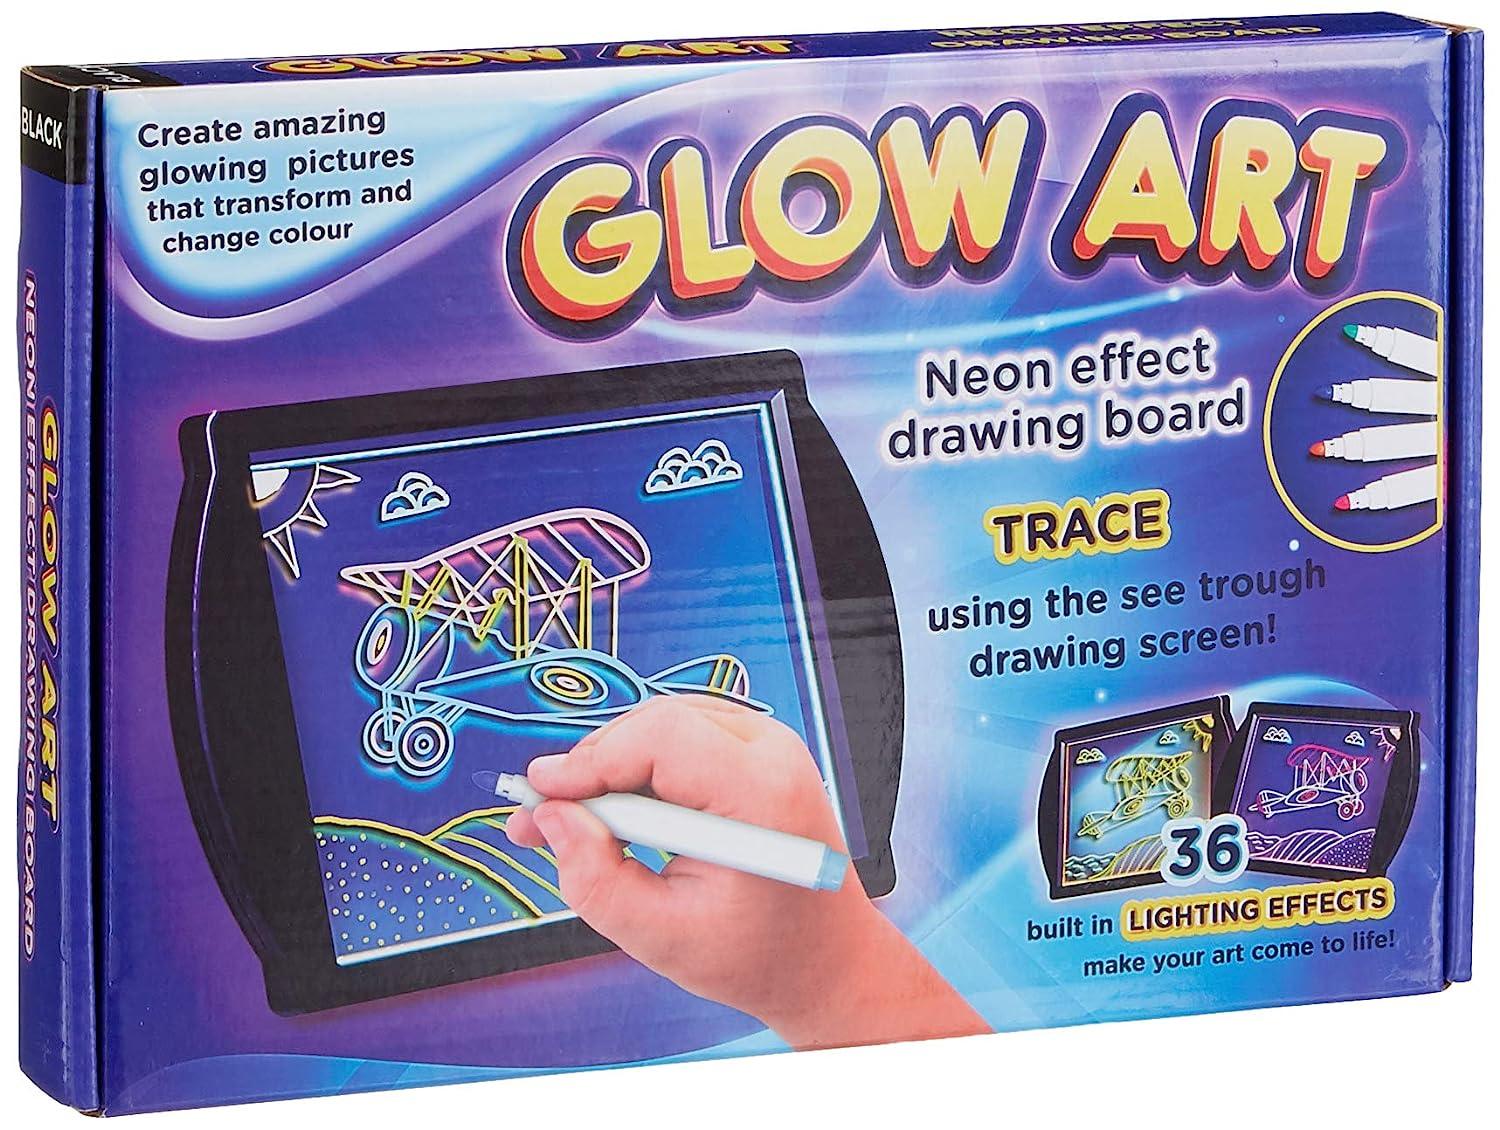 glow drawing pad